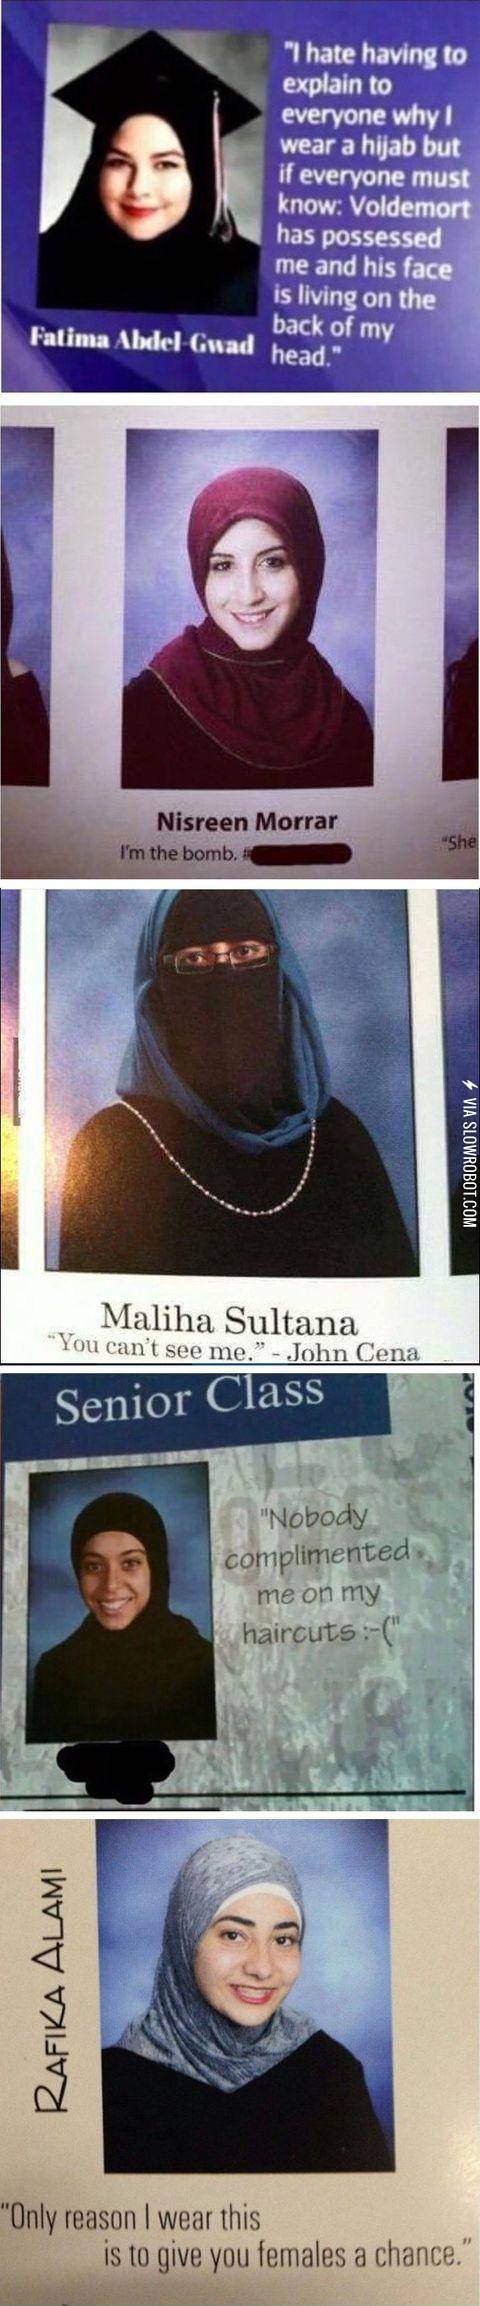 Hijab+humor